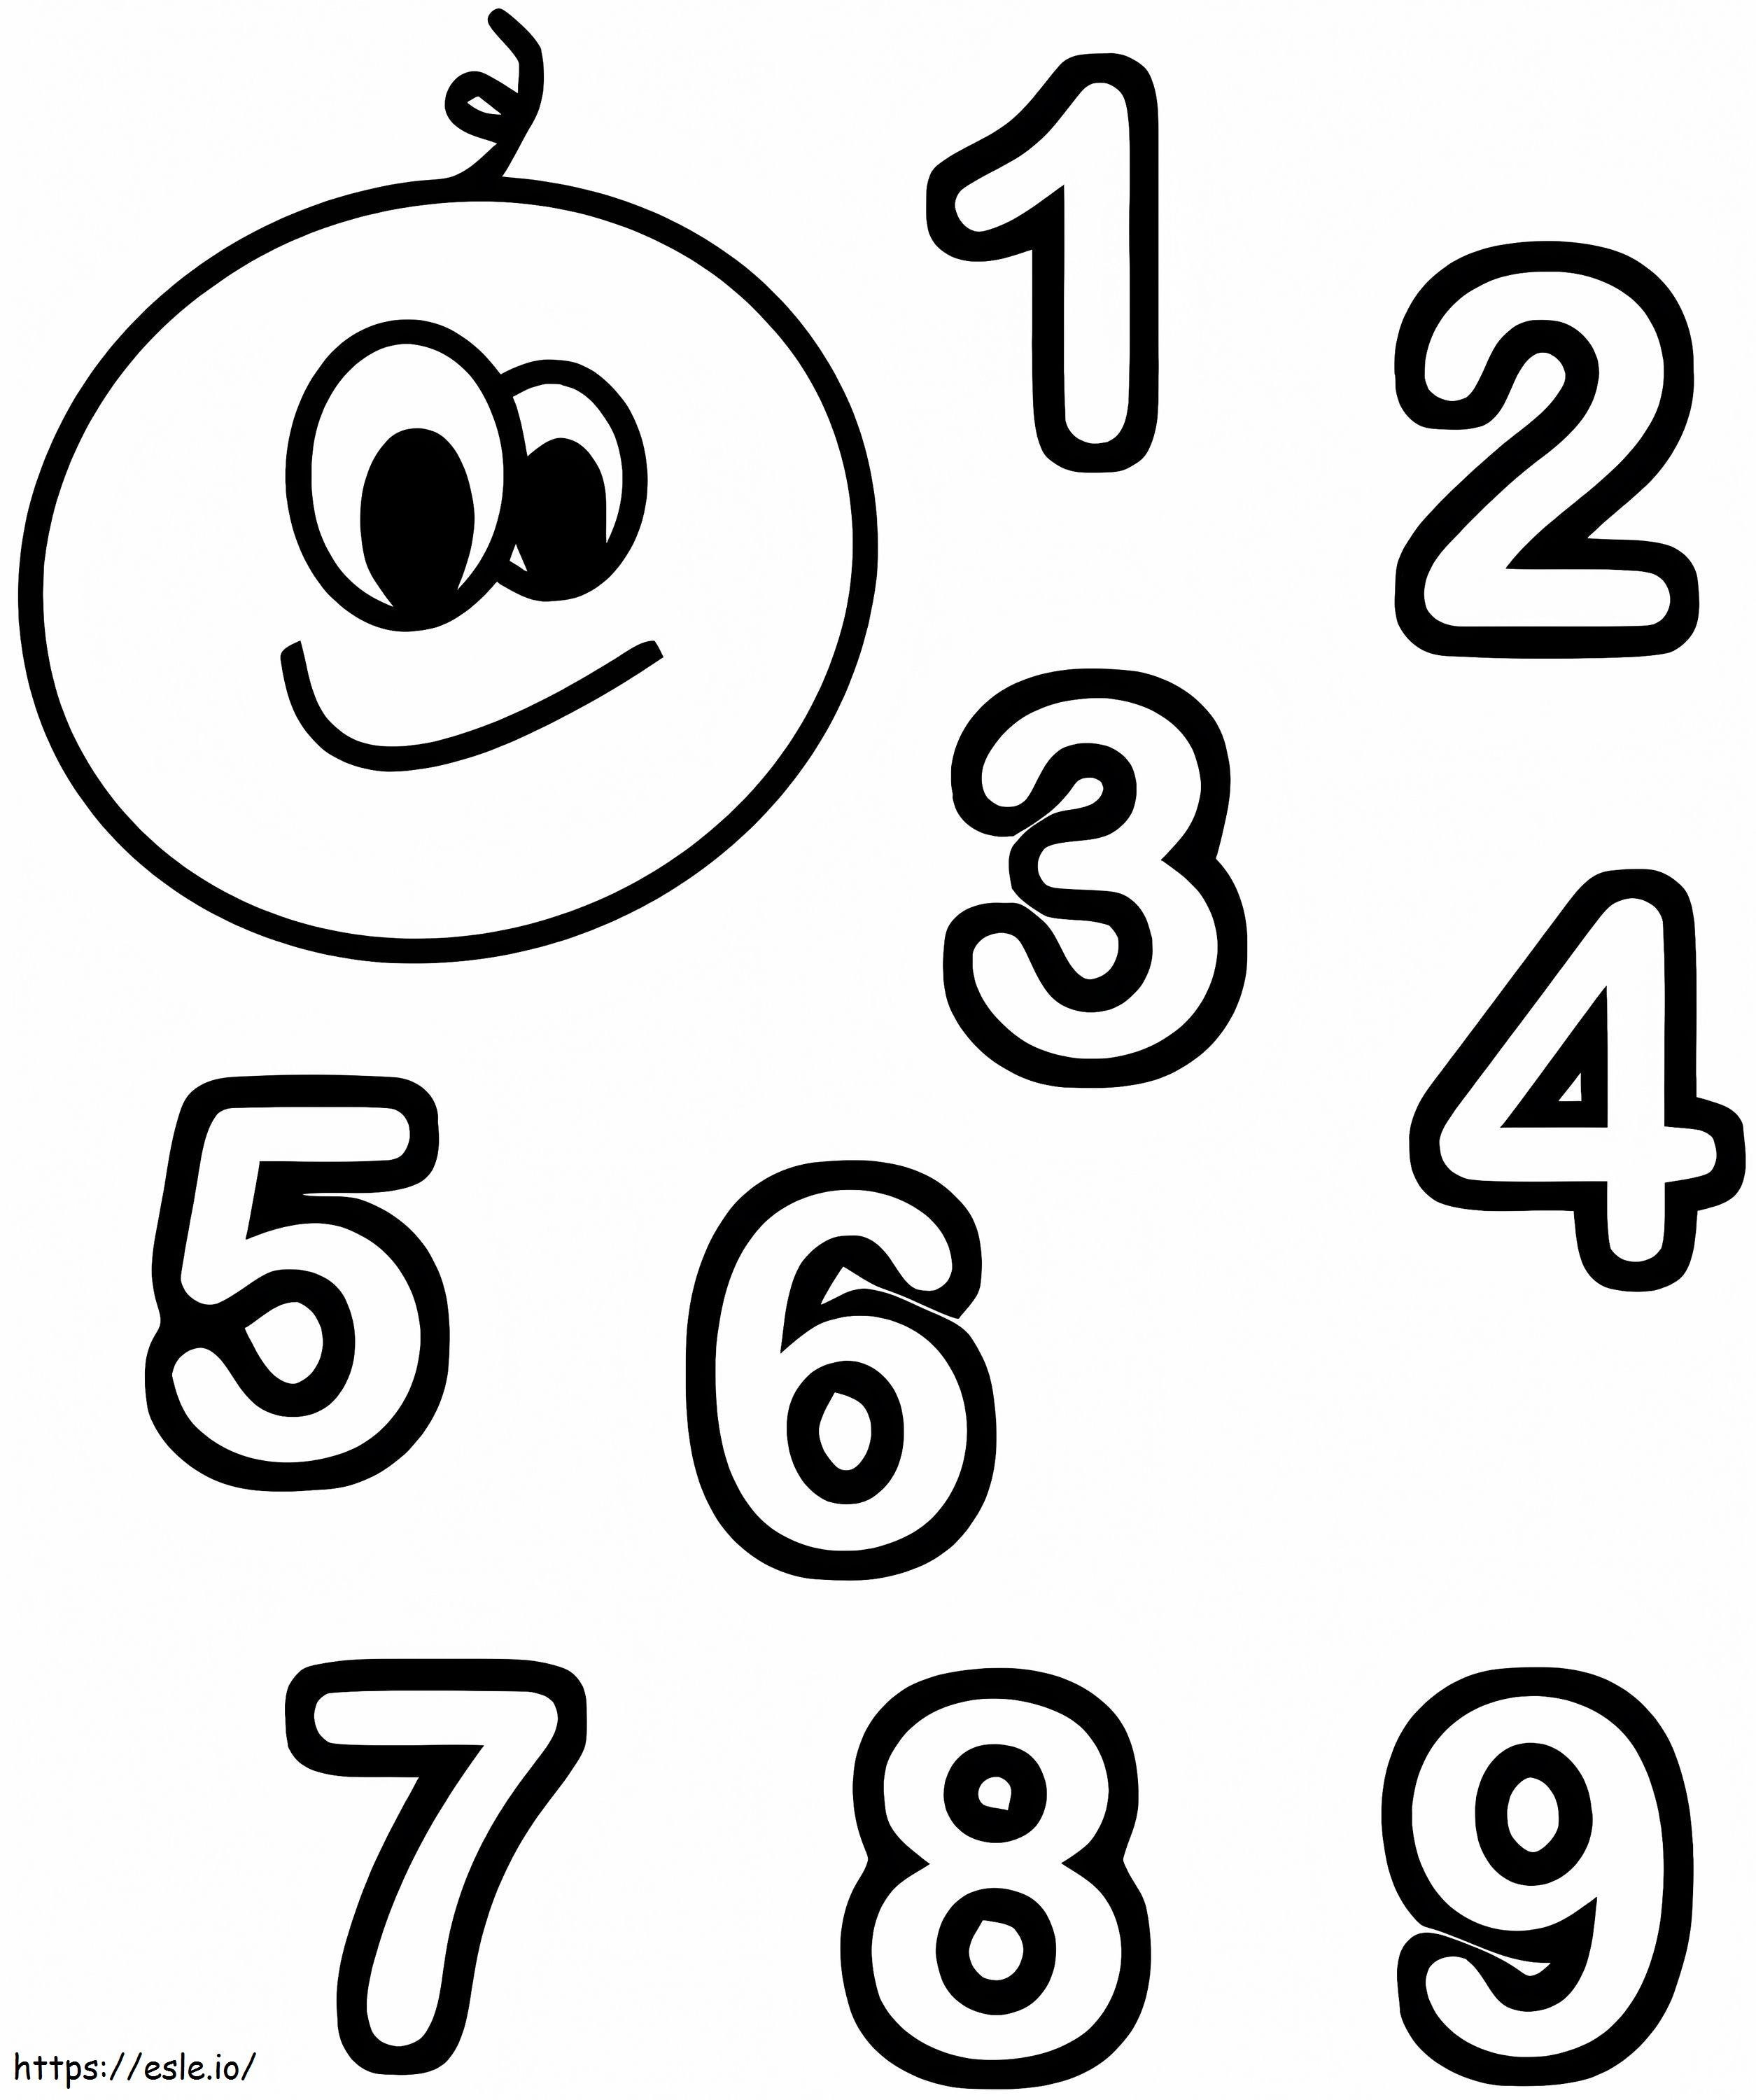 Número normal de 1 a 9 para colorir